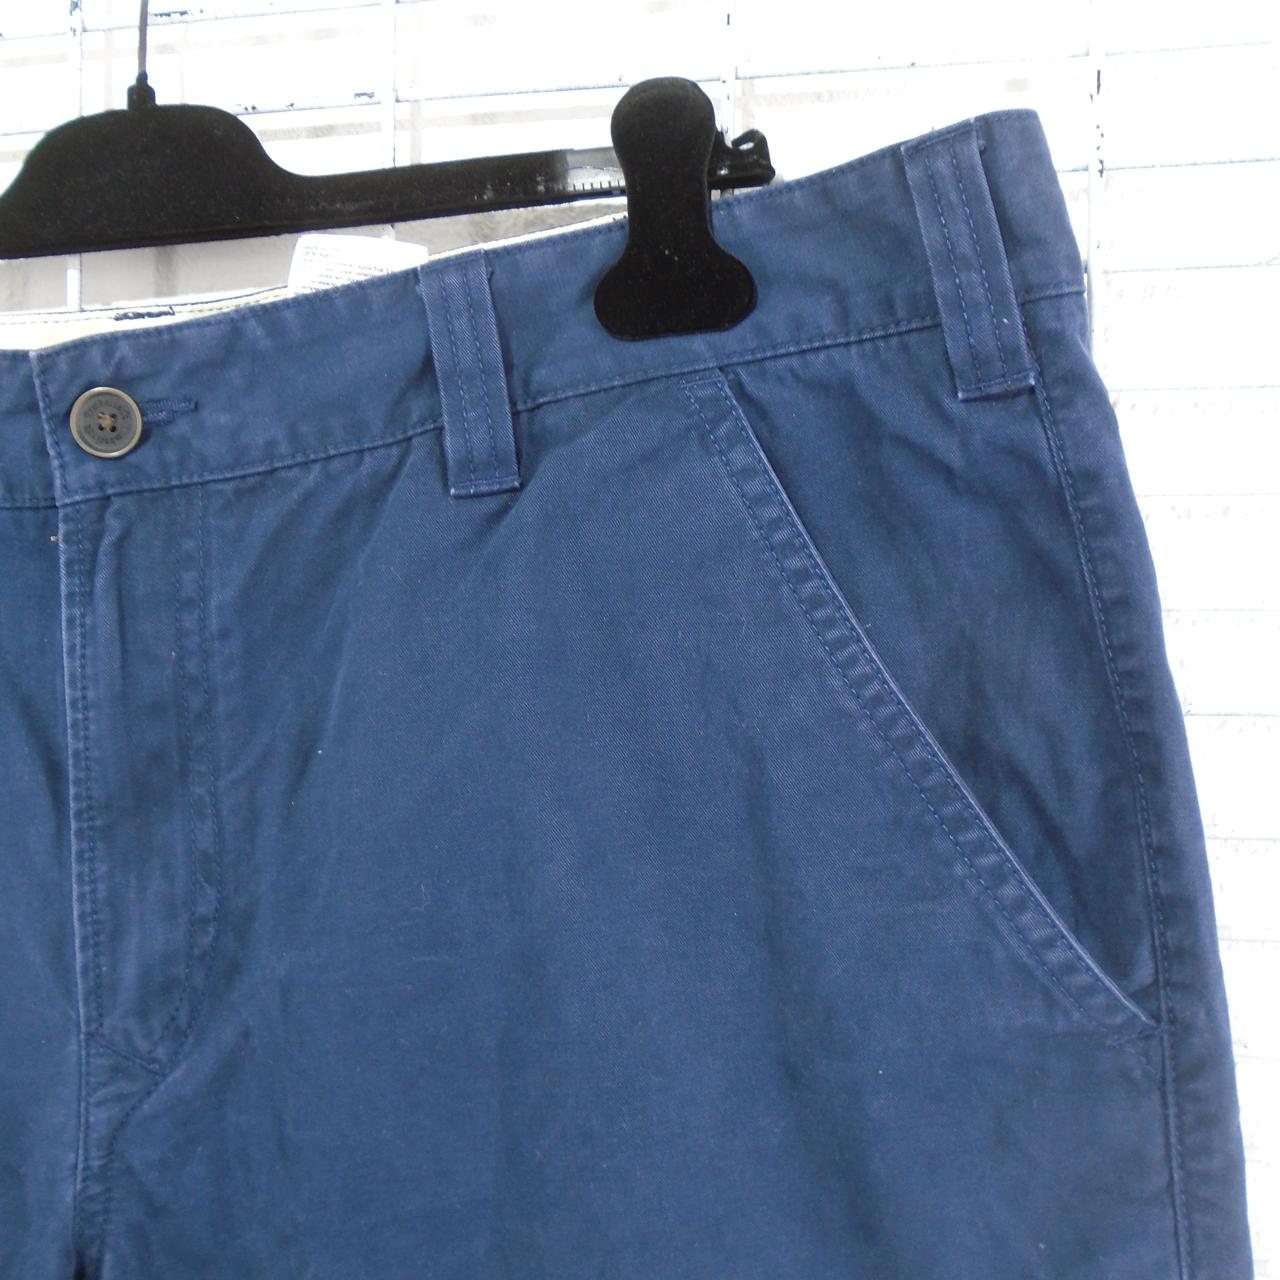 Pantalones cortos para hombre Timberland. Azul oscuro. L. Usado. Bien